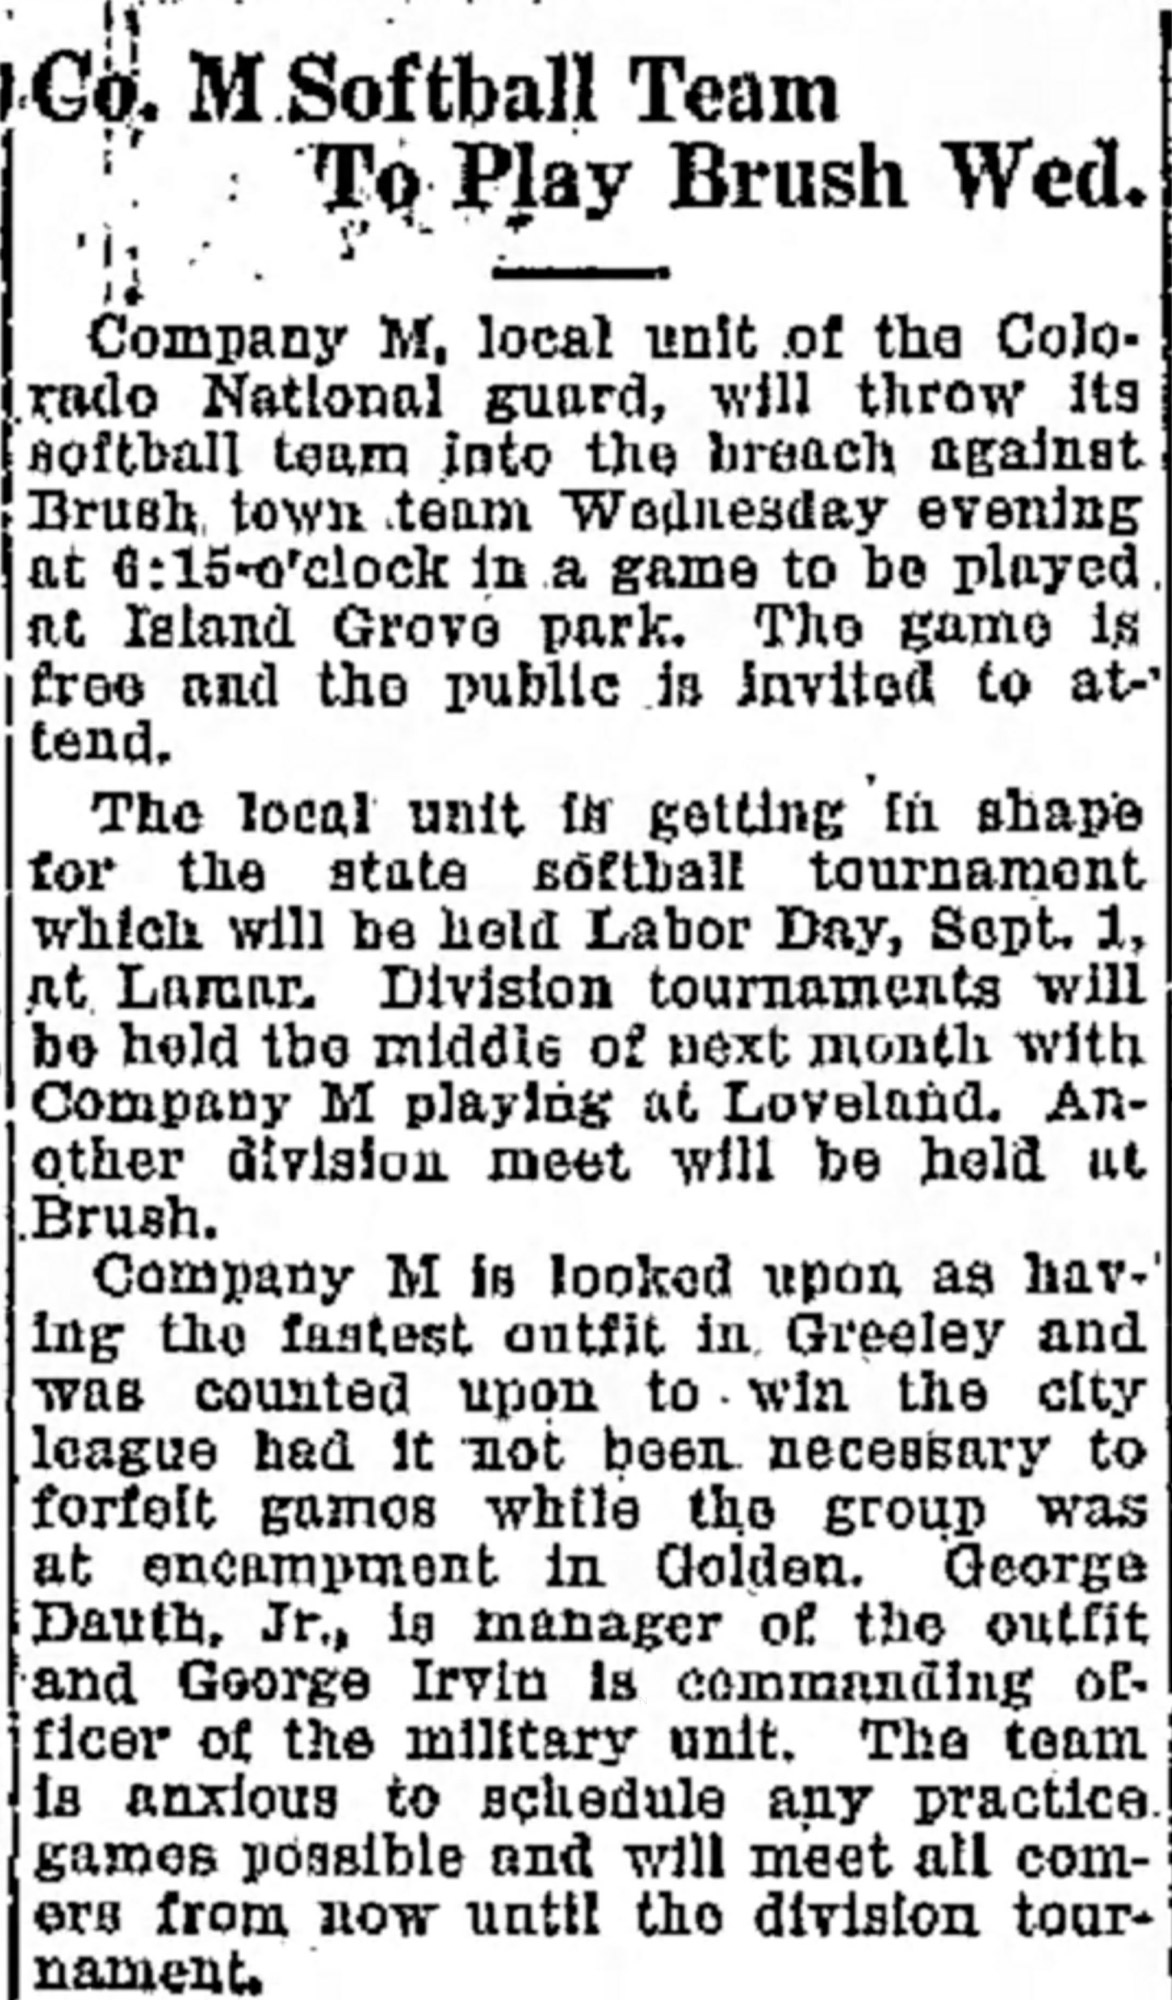 Dauth Family Archive - 1930-07-15 - Greeley Daily Tribune - June Dauth Managing Company M Softball Team